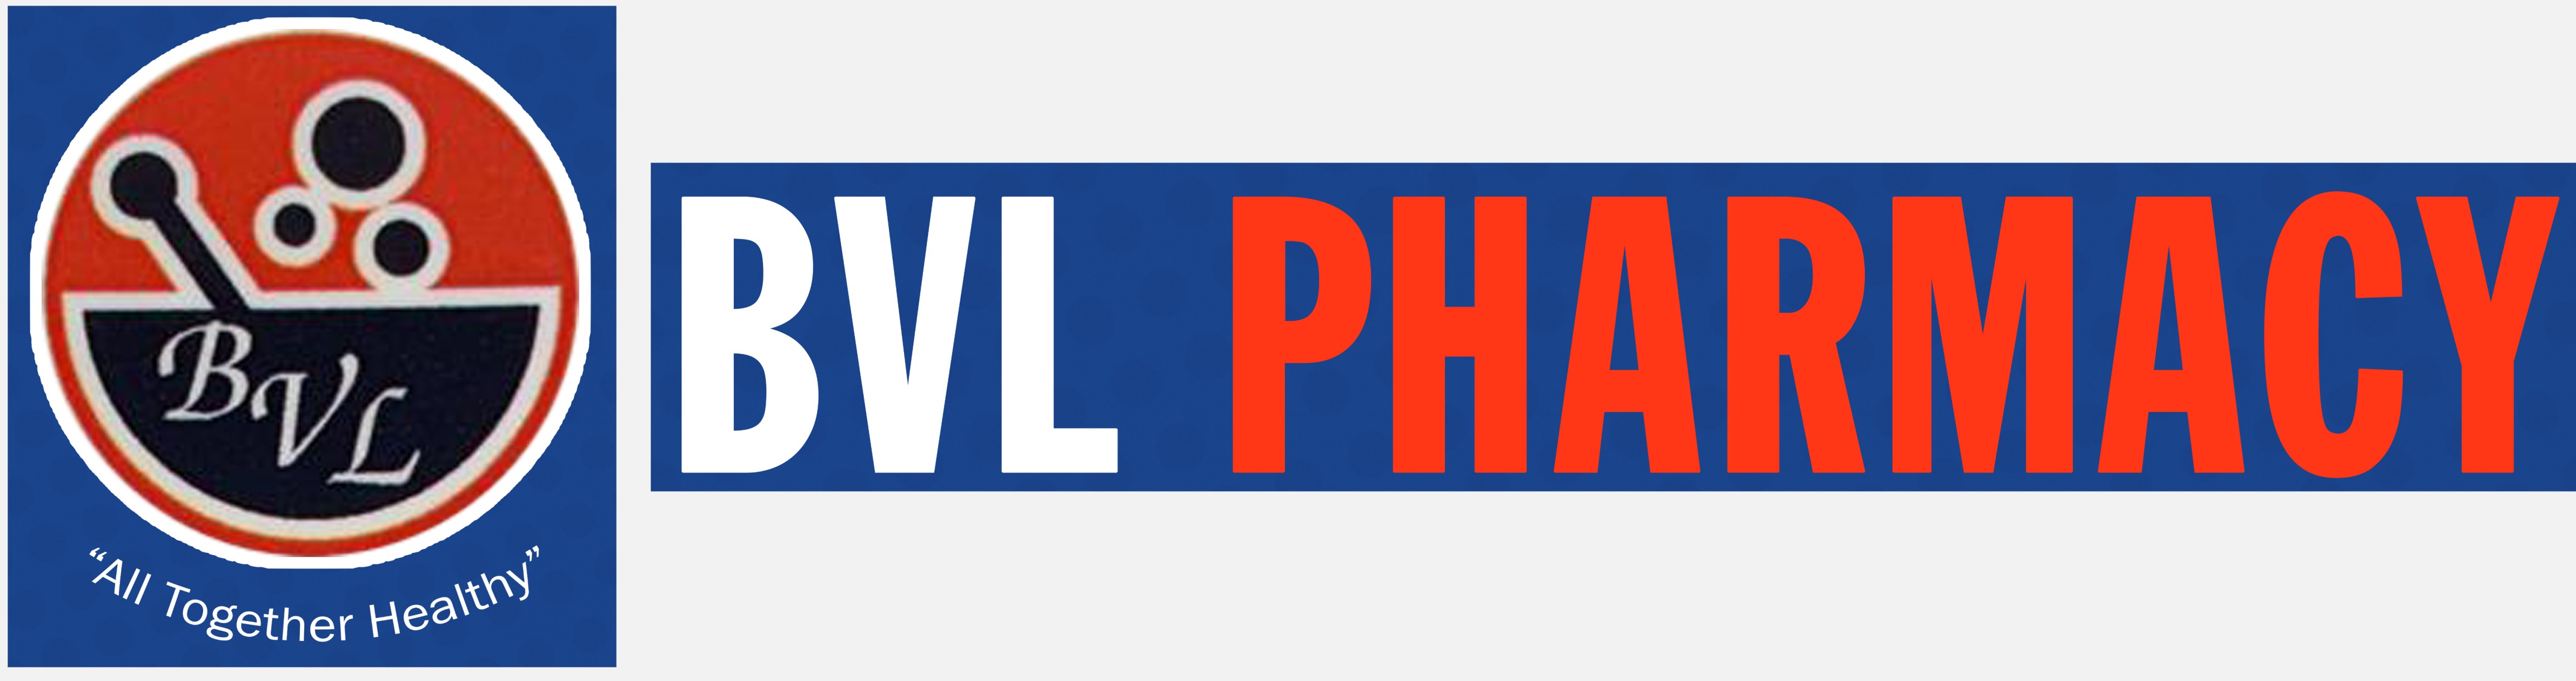 BVL Pharmacy Logo